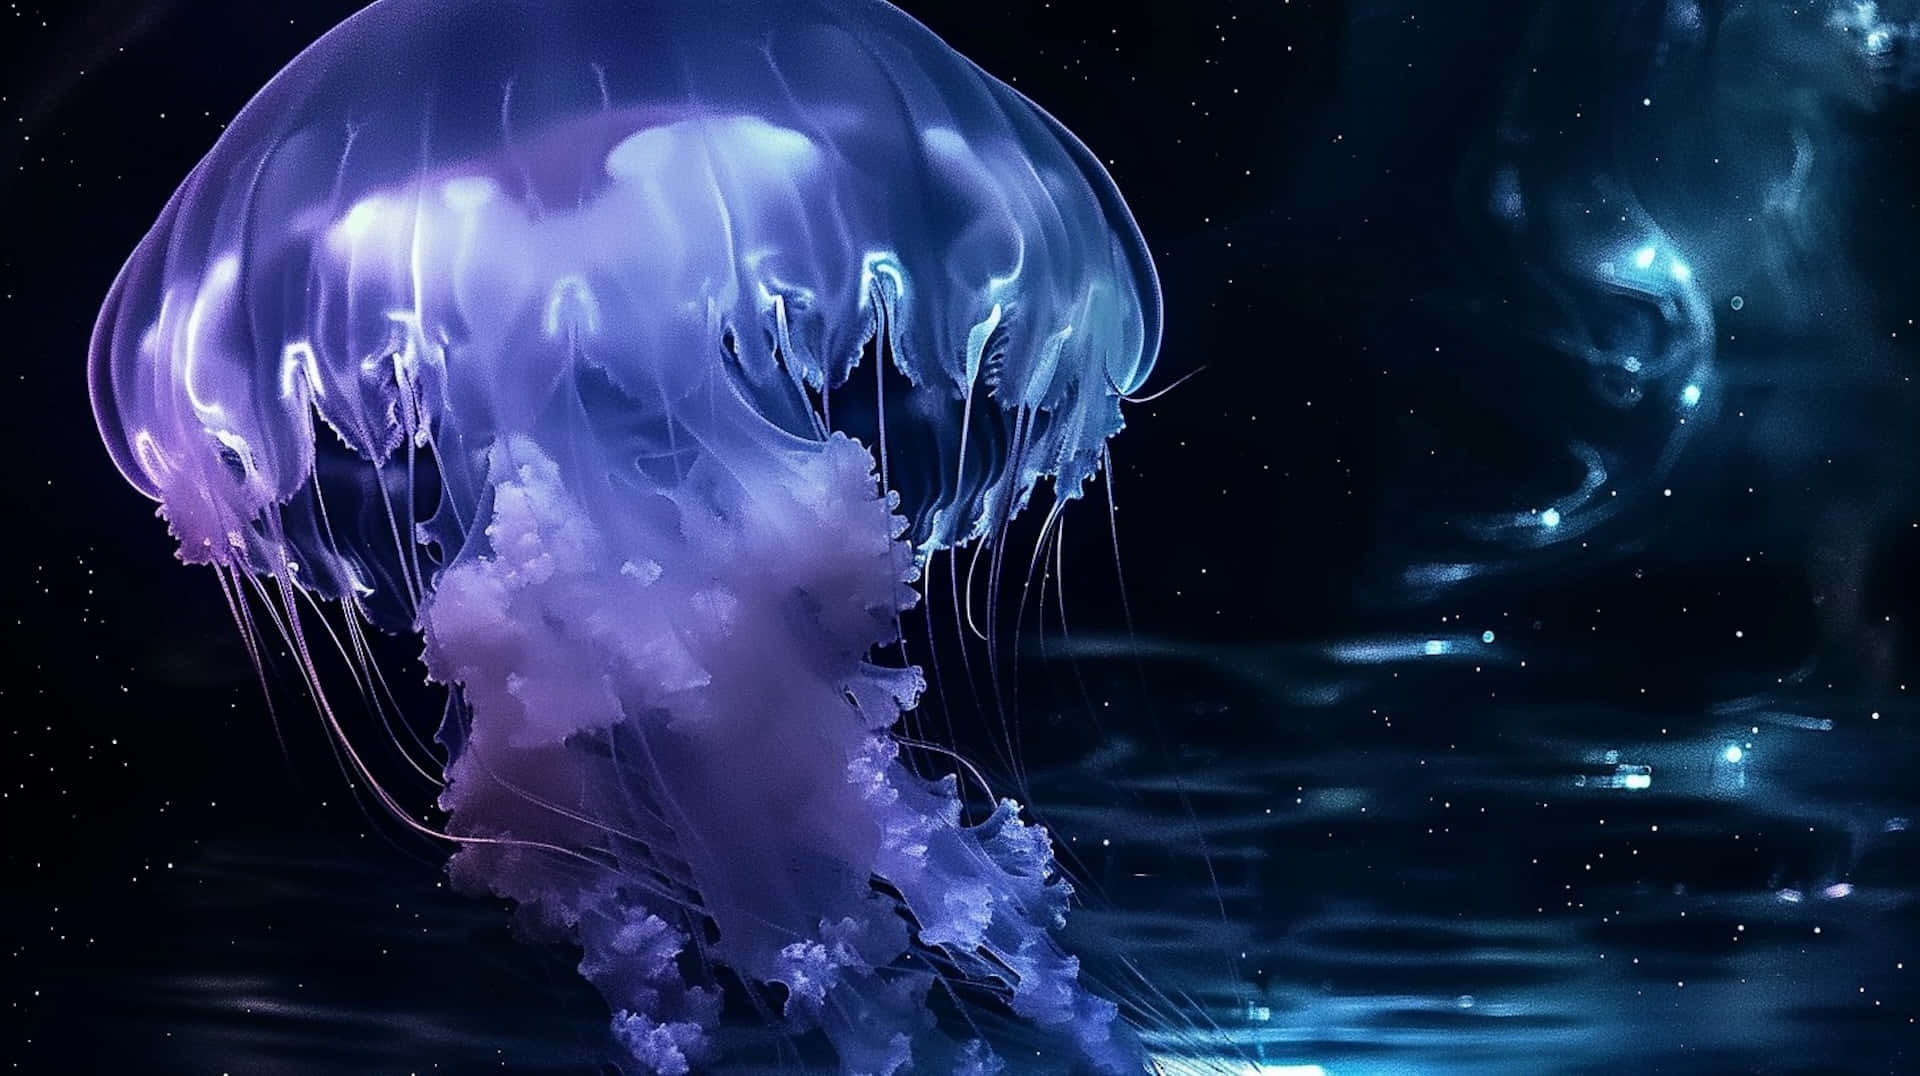 Luminous Moon Jelly Underwater Wallpaper